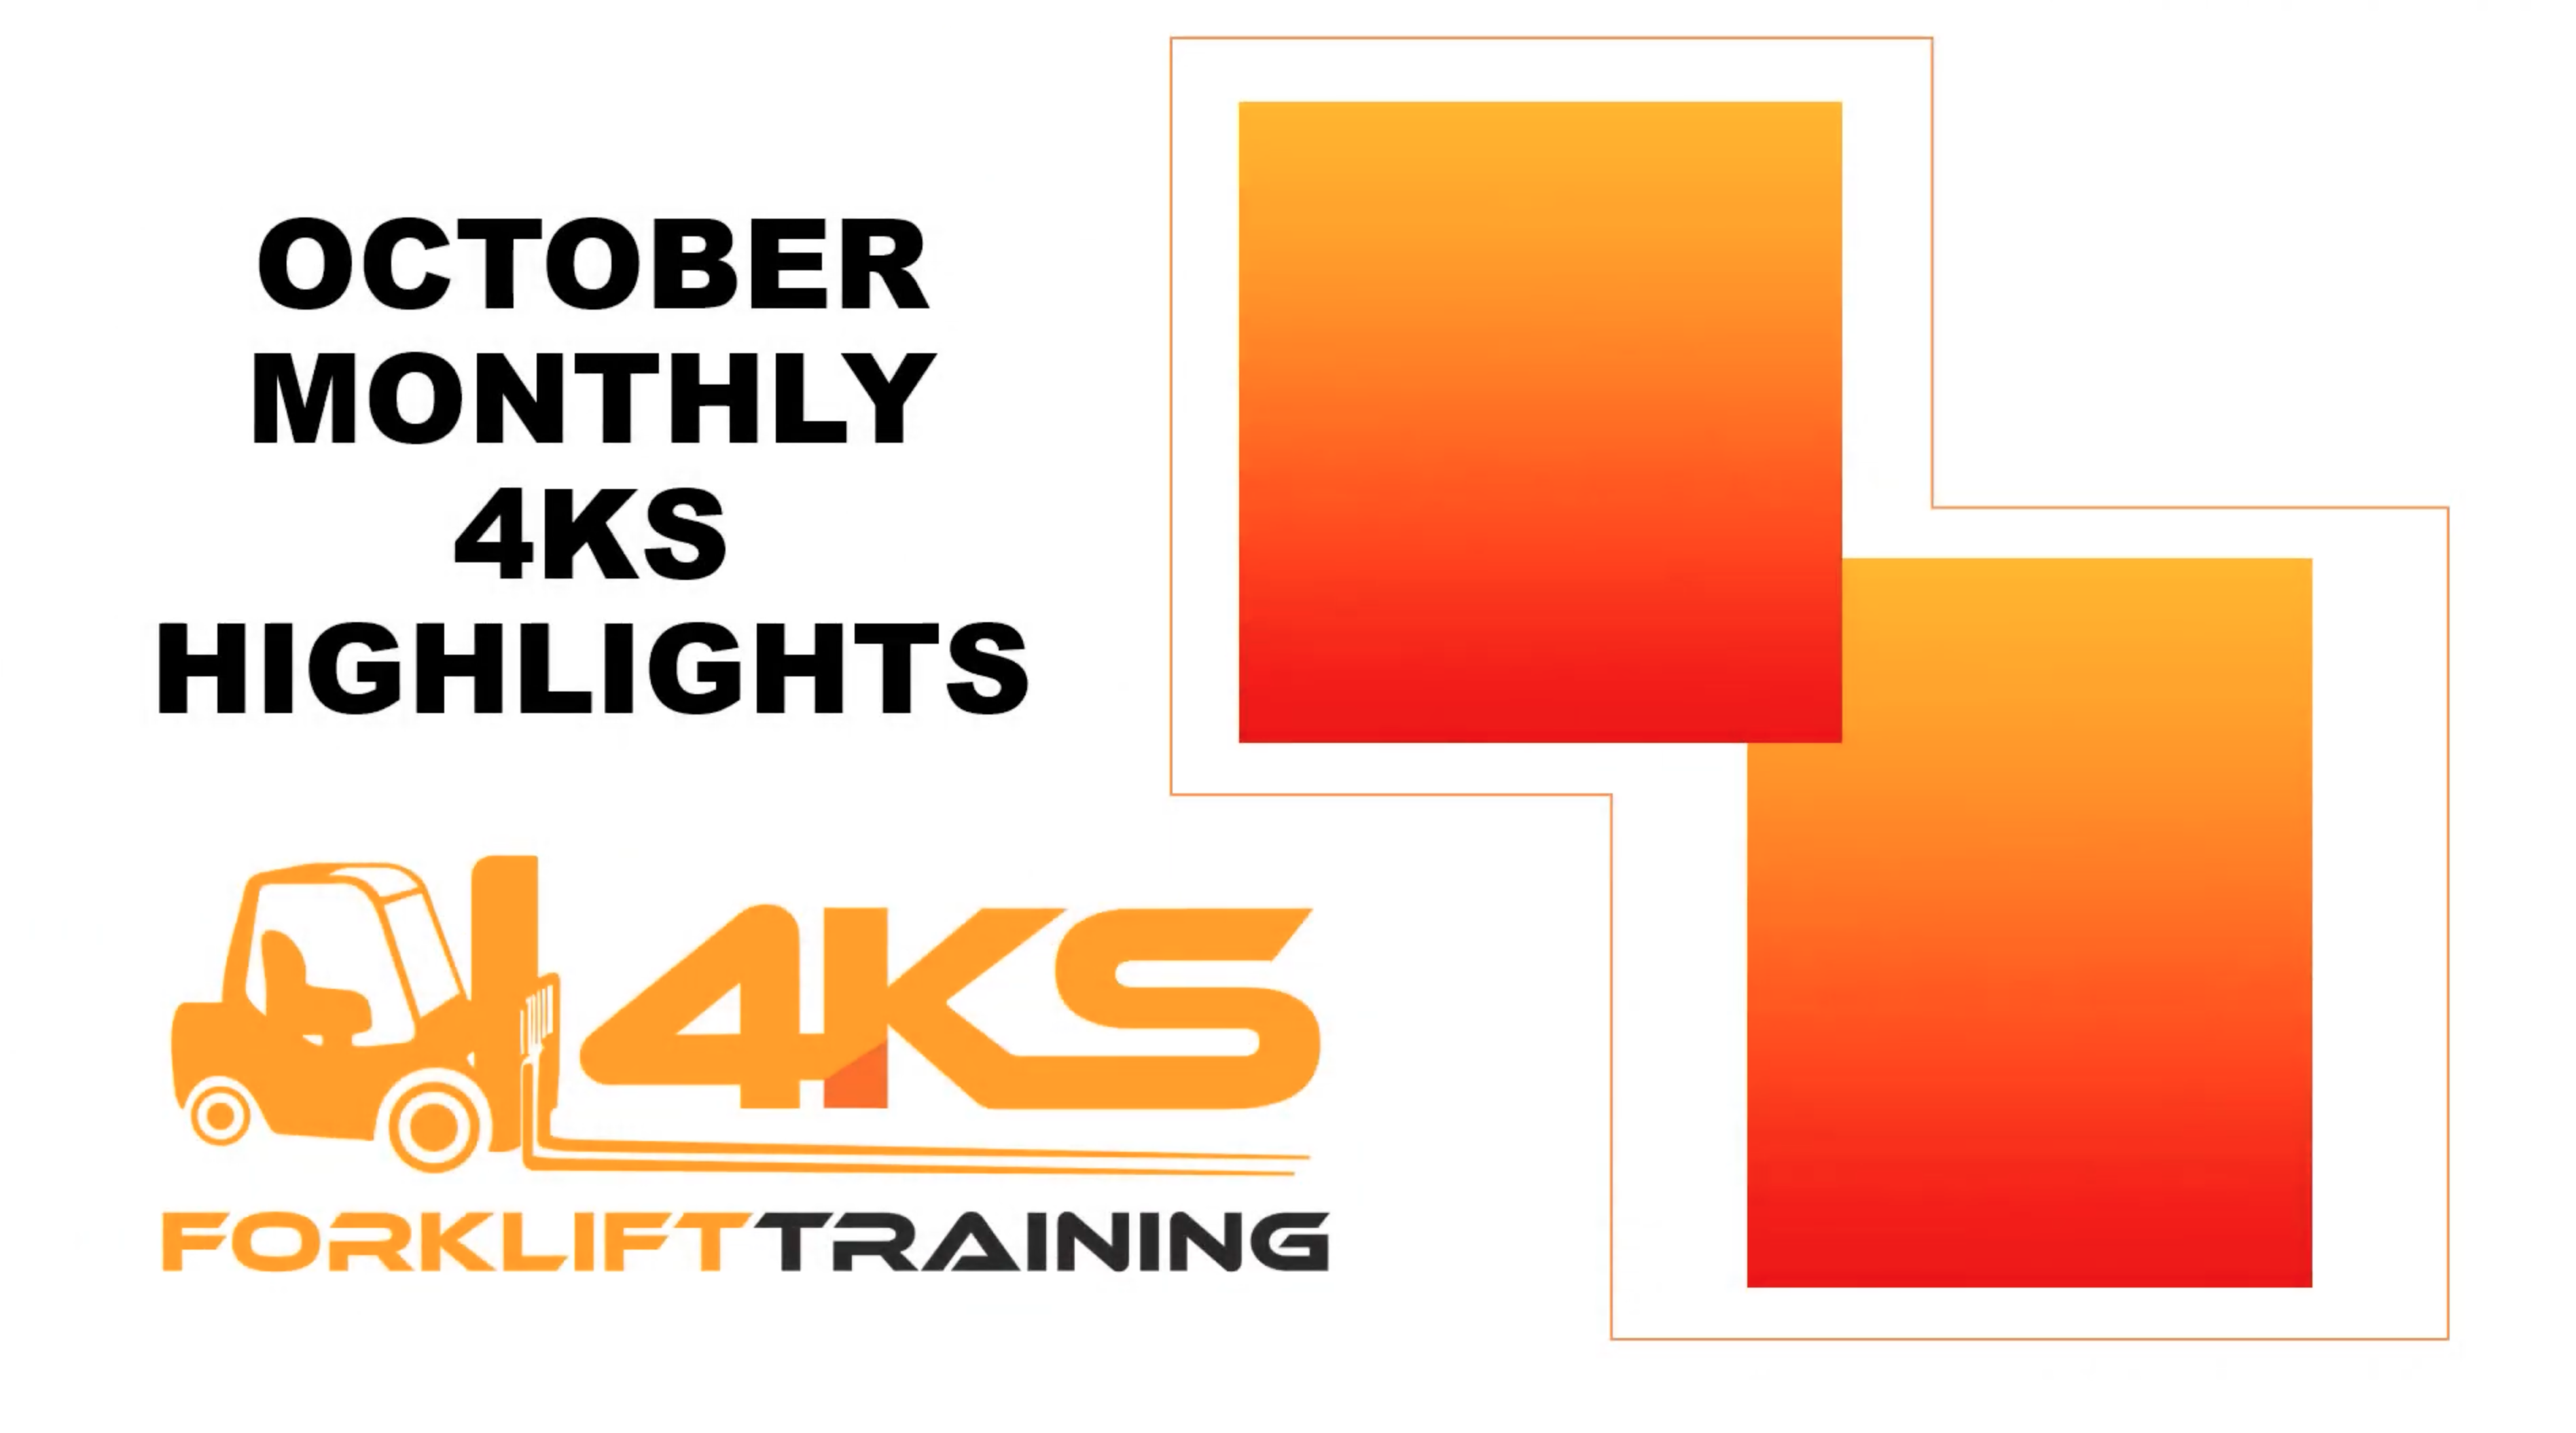 forklift training highlights | 4KS Forklift Training